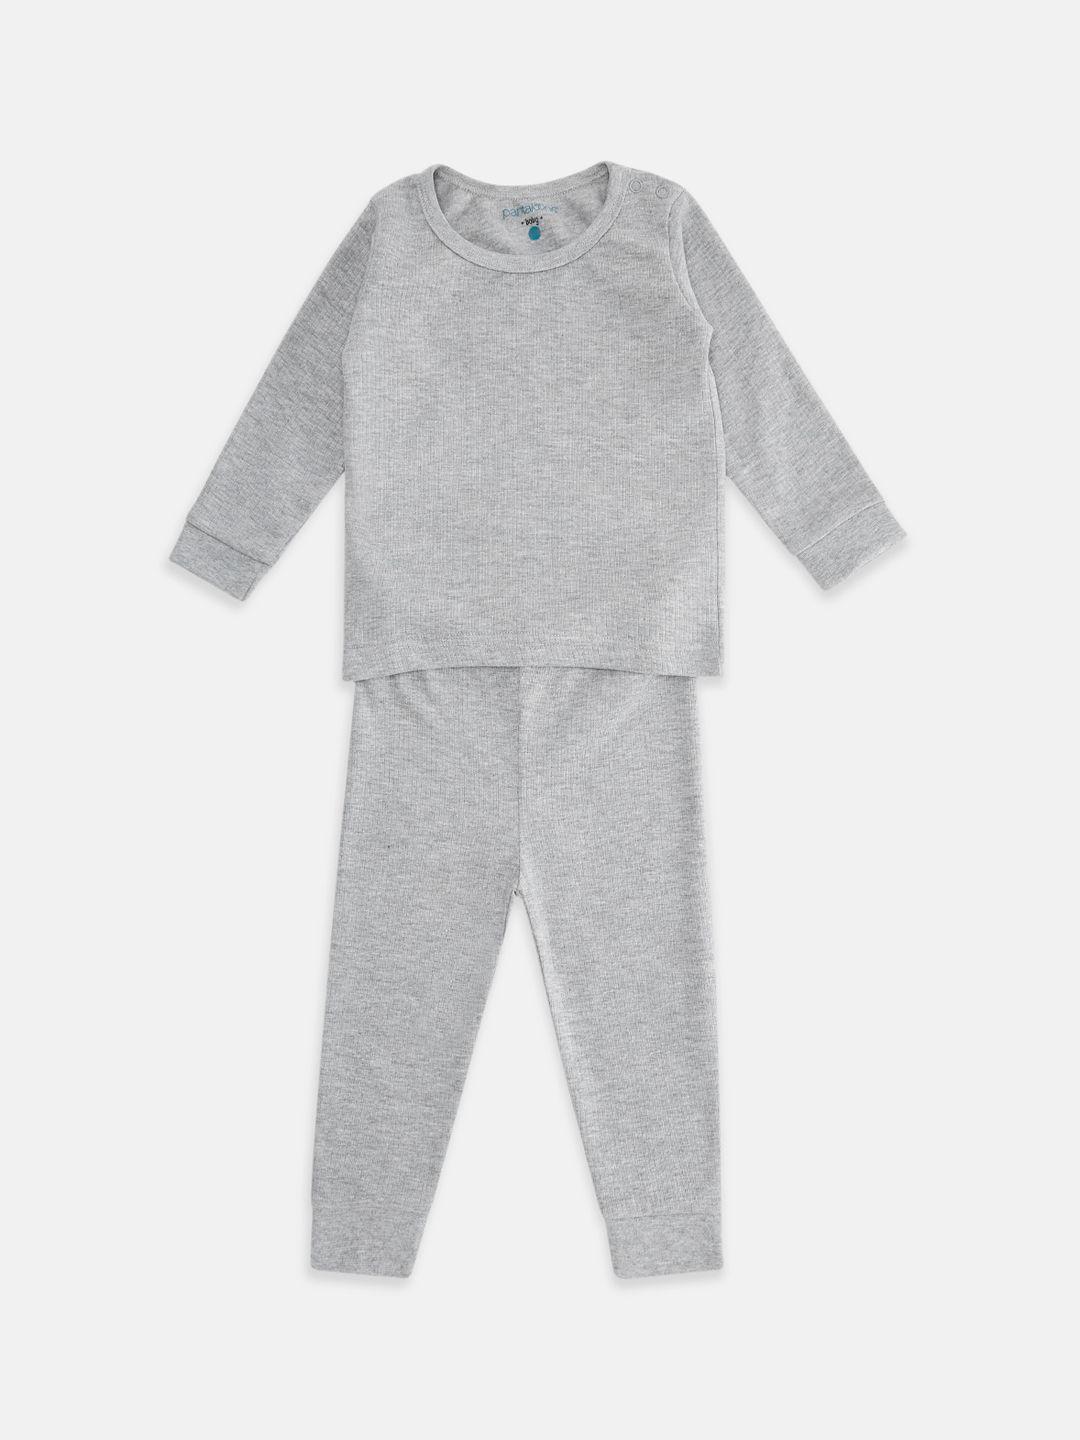 pantaloons-baby-infants-grey-melange-solid-thermal-top-&-bottom